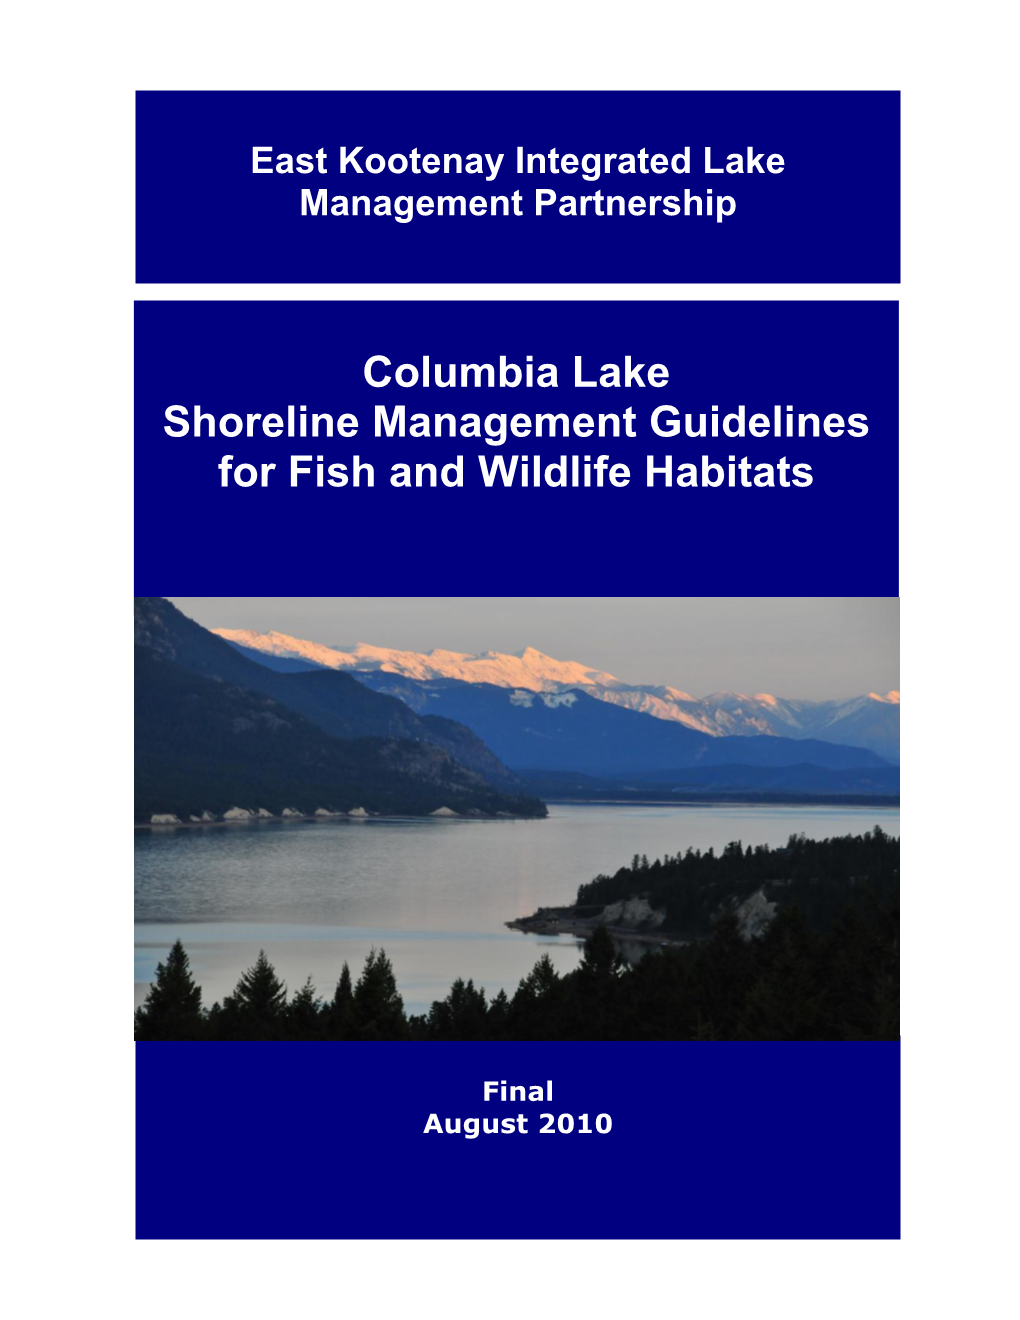 Columbia Lake Shoreline Management Guidelines for Fish and Wildlife Habitats